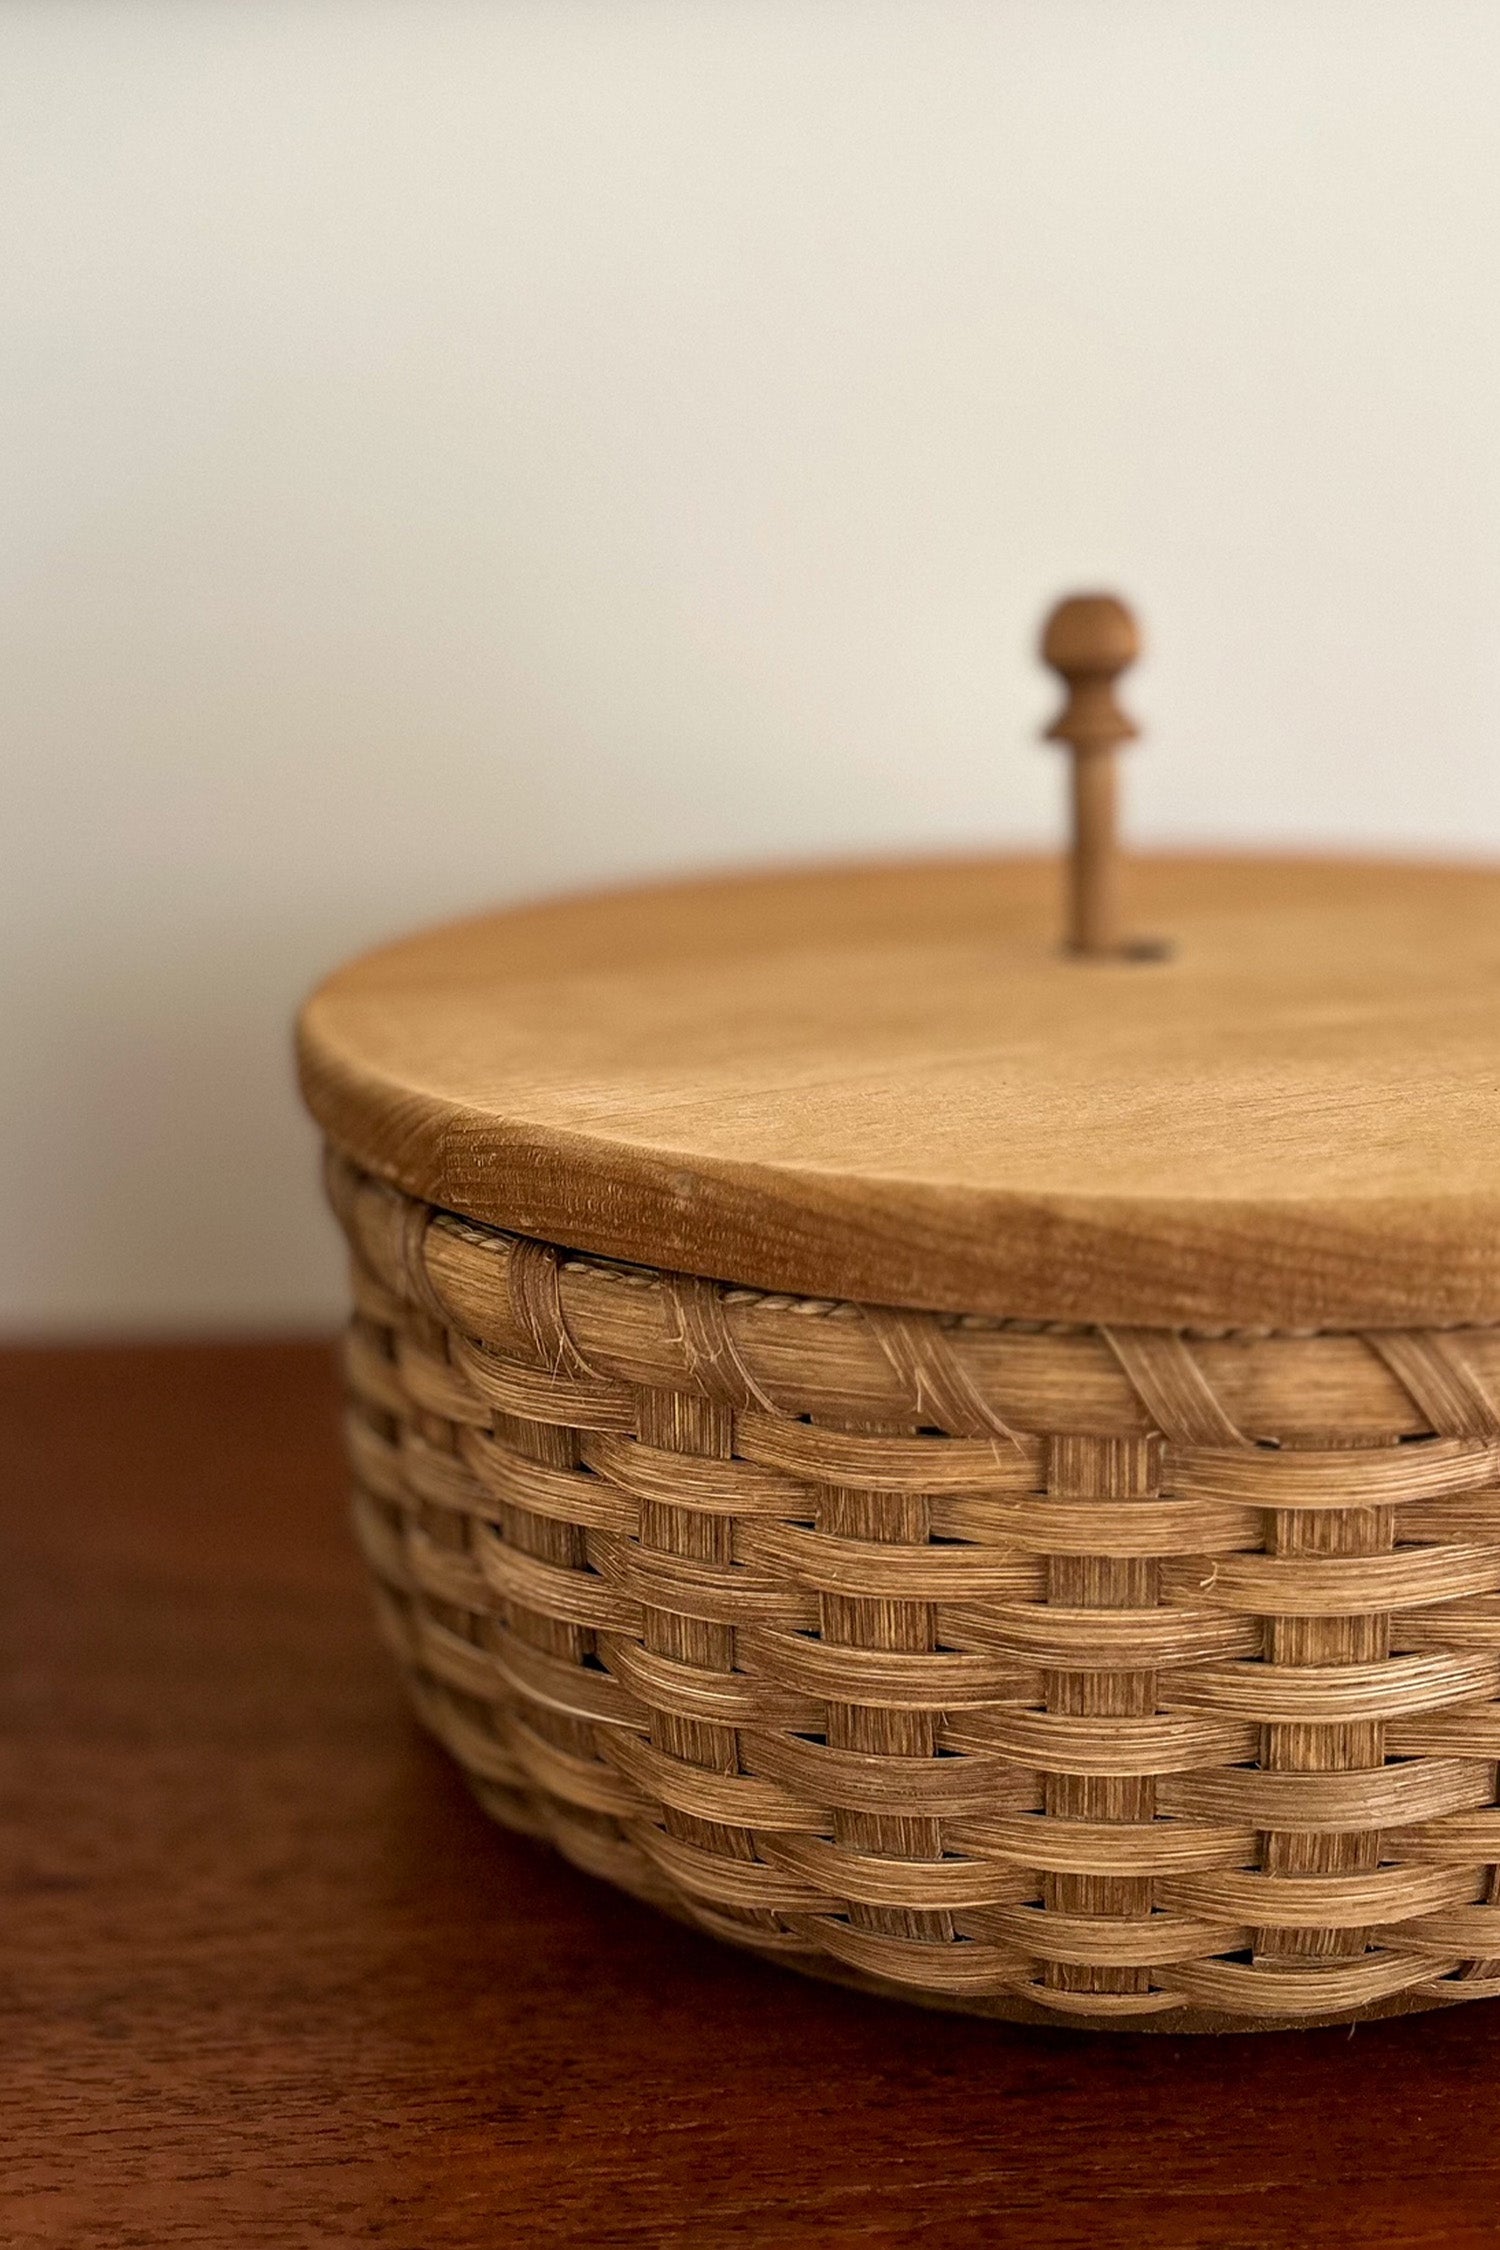 Round Sewing & Knitting Basket | Large Amish Woven Wooden Basket